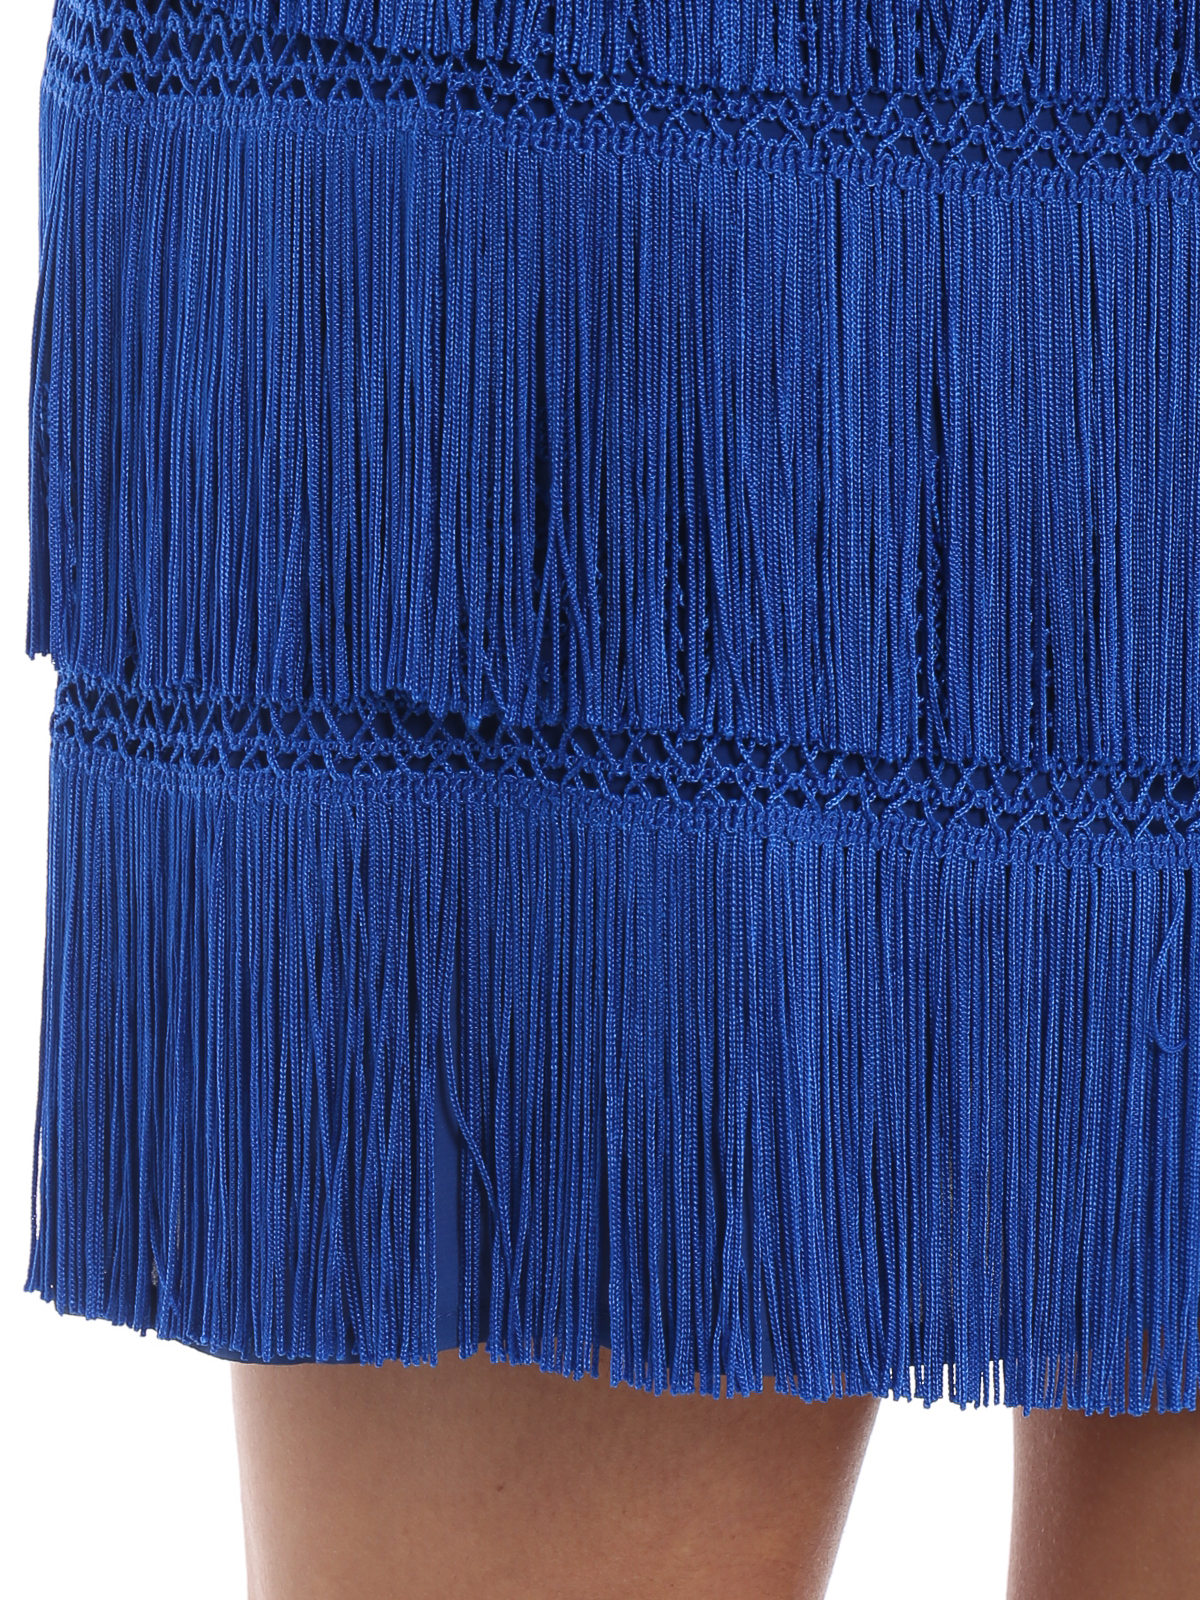 Mini skirts Alberta Ferretti - Charleston style fringed mini skirt -  012516160296